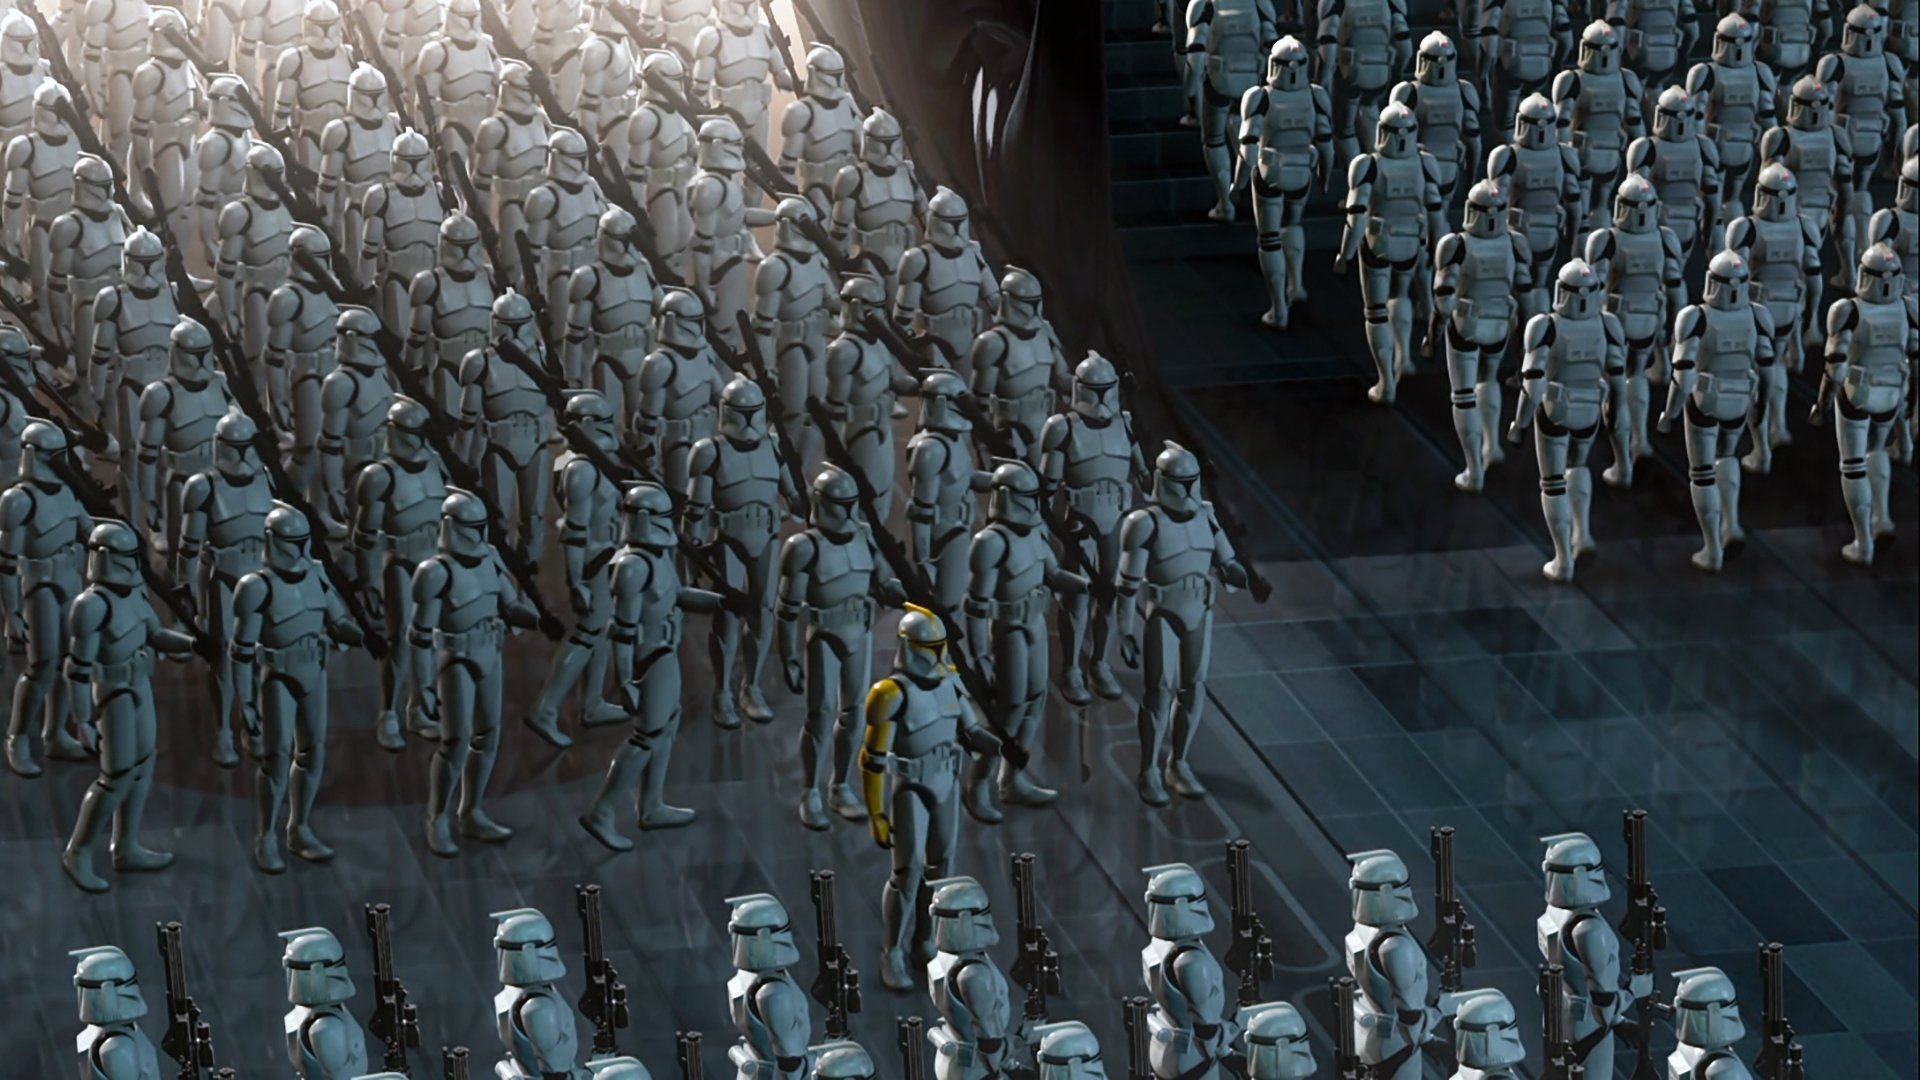 Star Wars Episode Ii: Attack Of The Clones Wallpapers